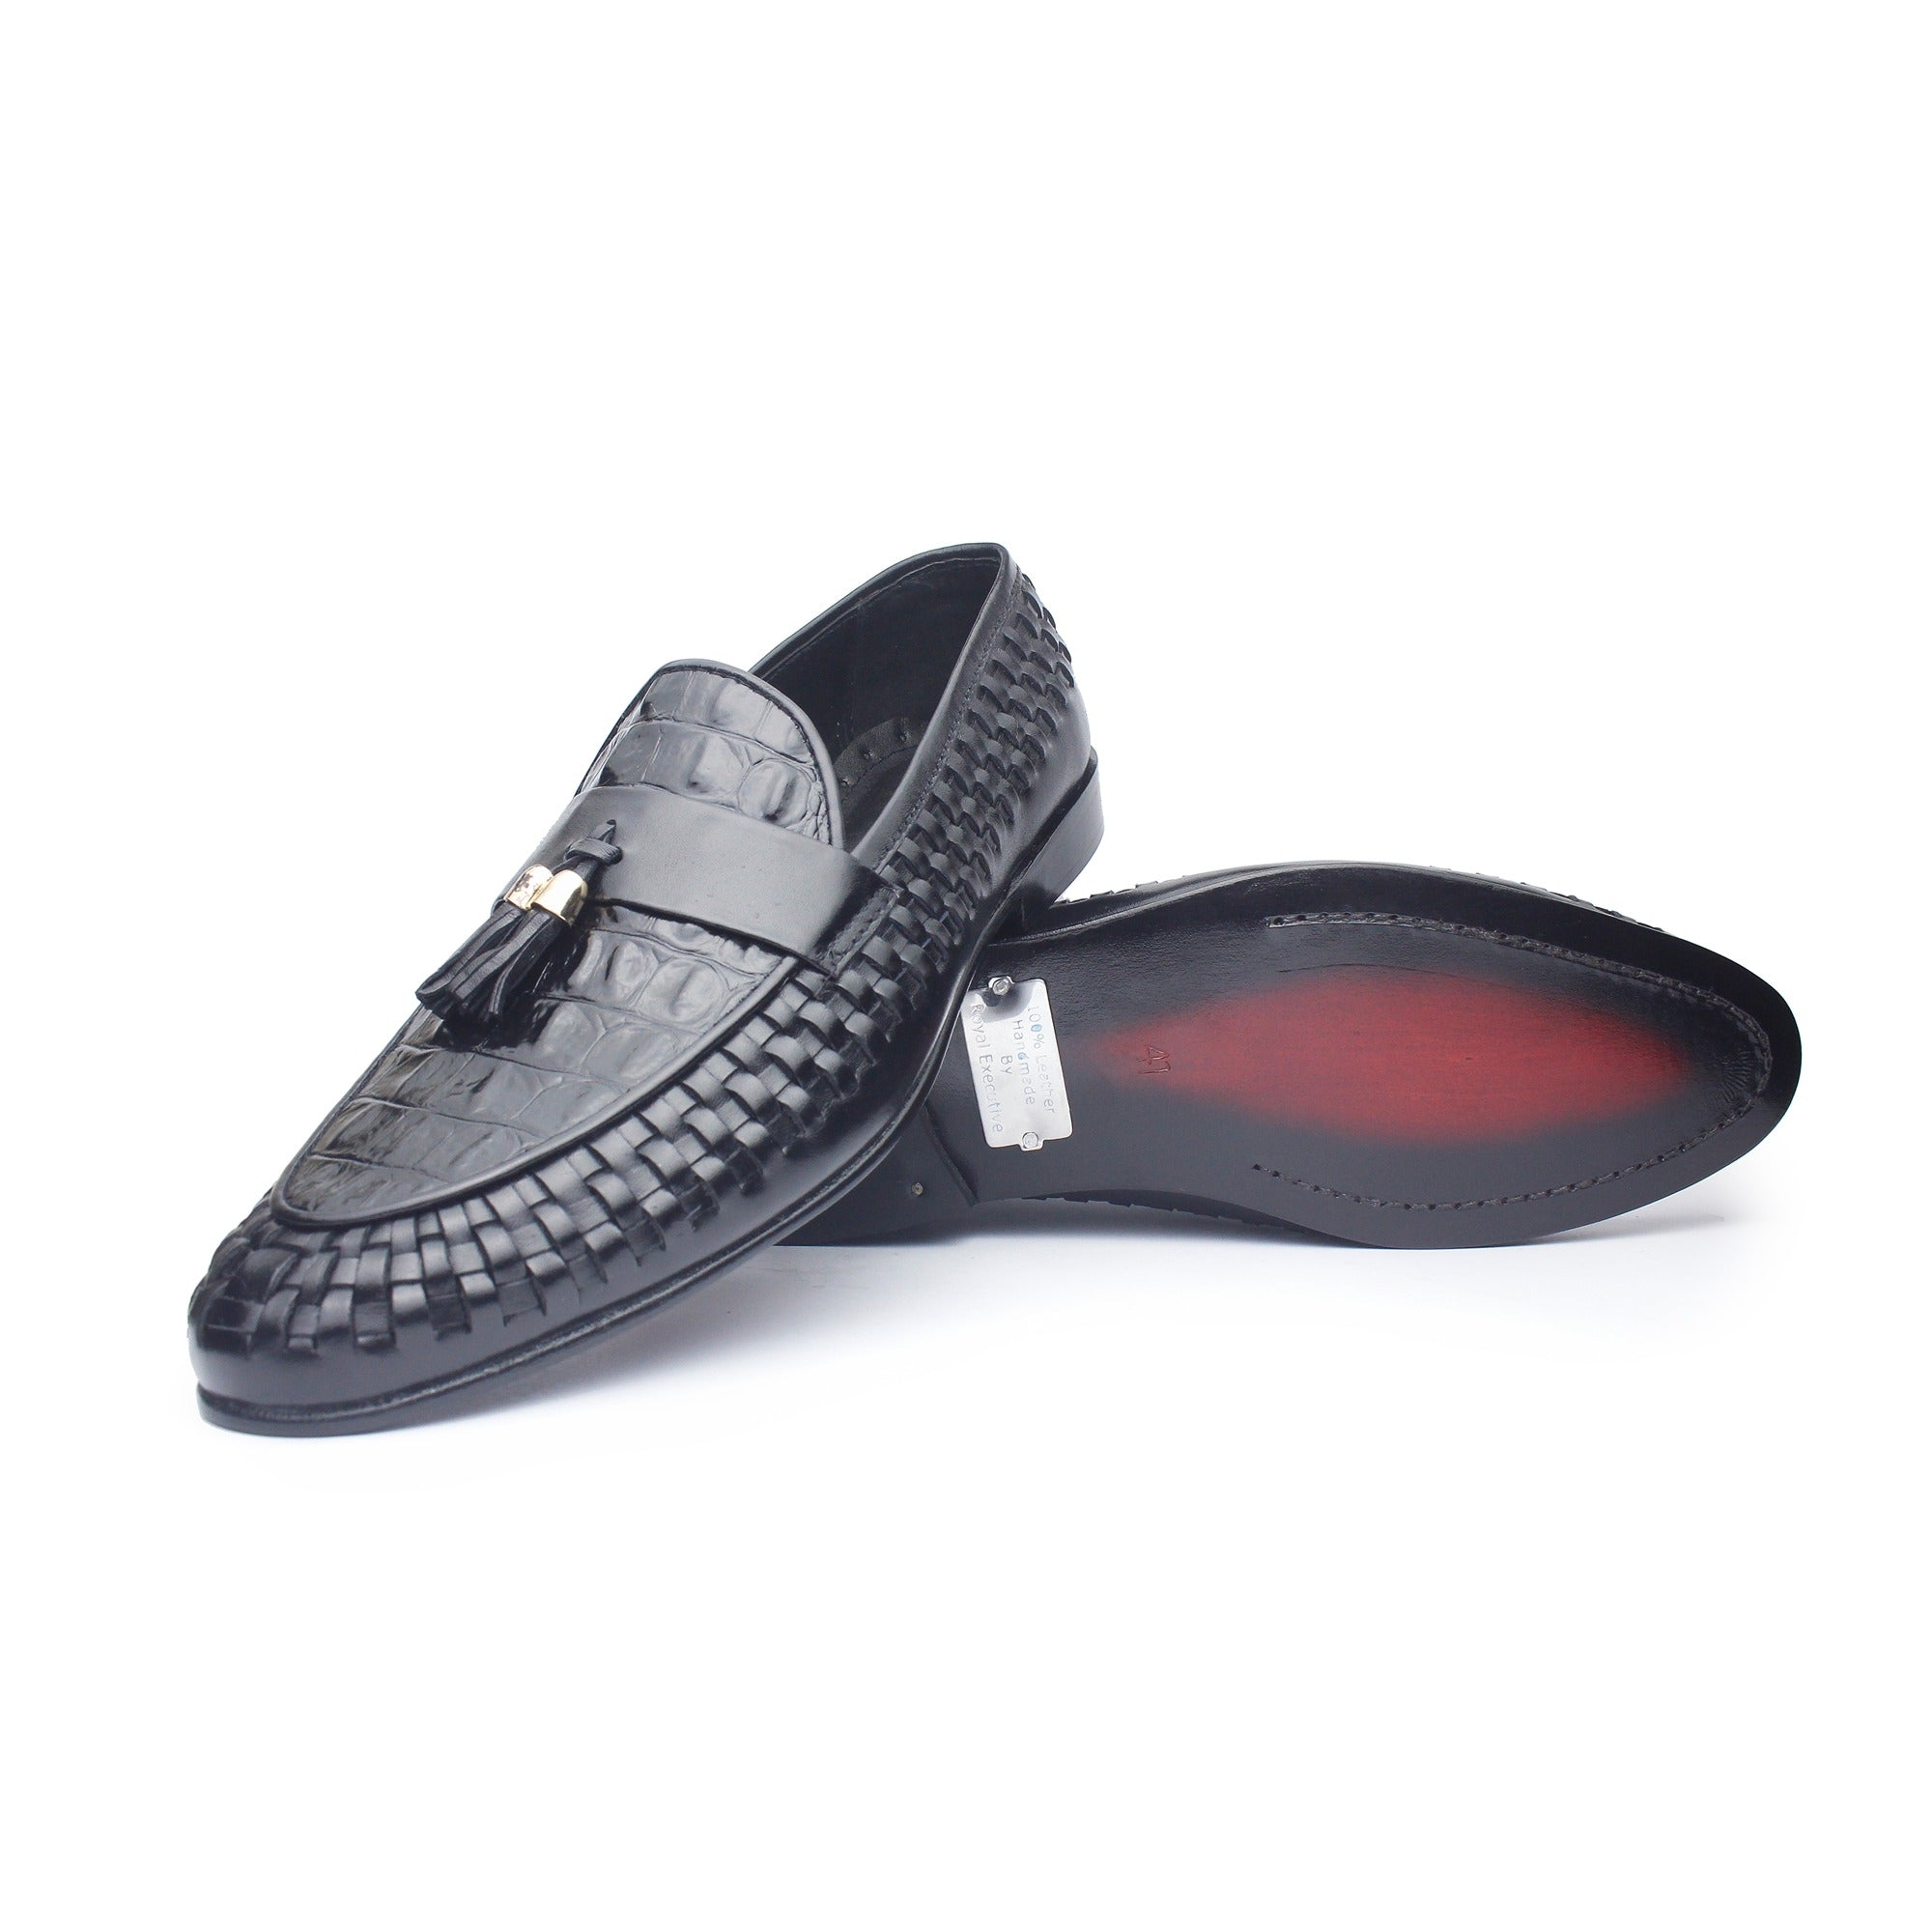 Royal Sniper Black - Premium Shoes from royalstepshops - Just Rs.8400! Shop now at ROYAL STEP